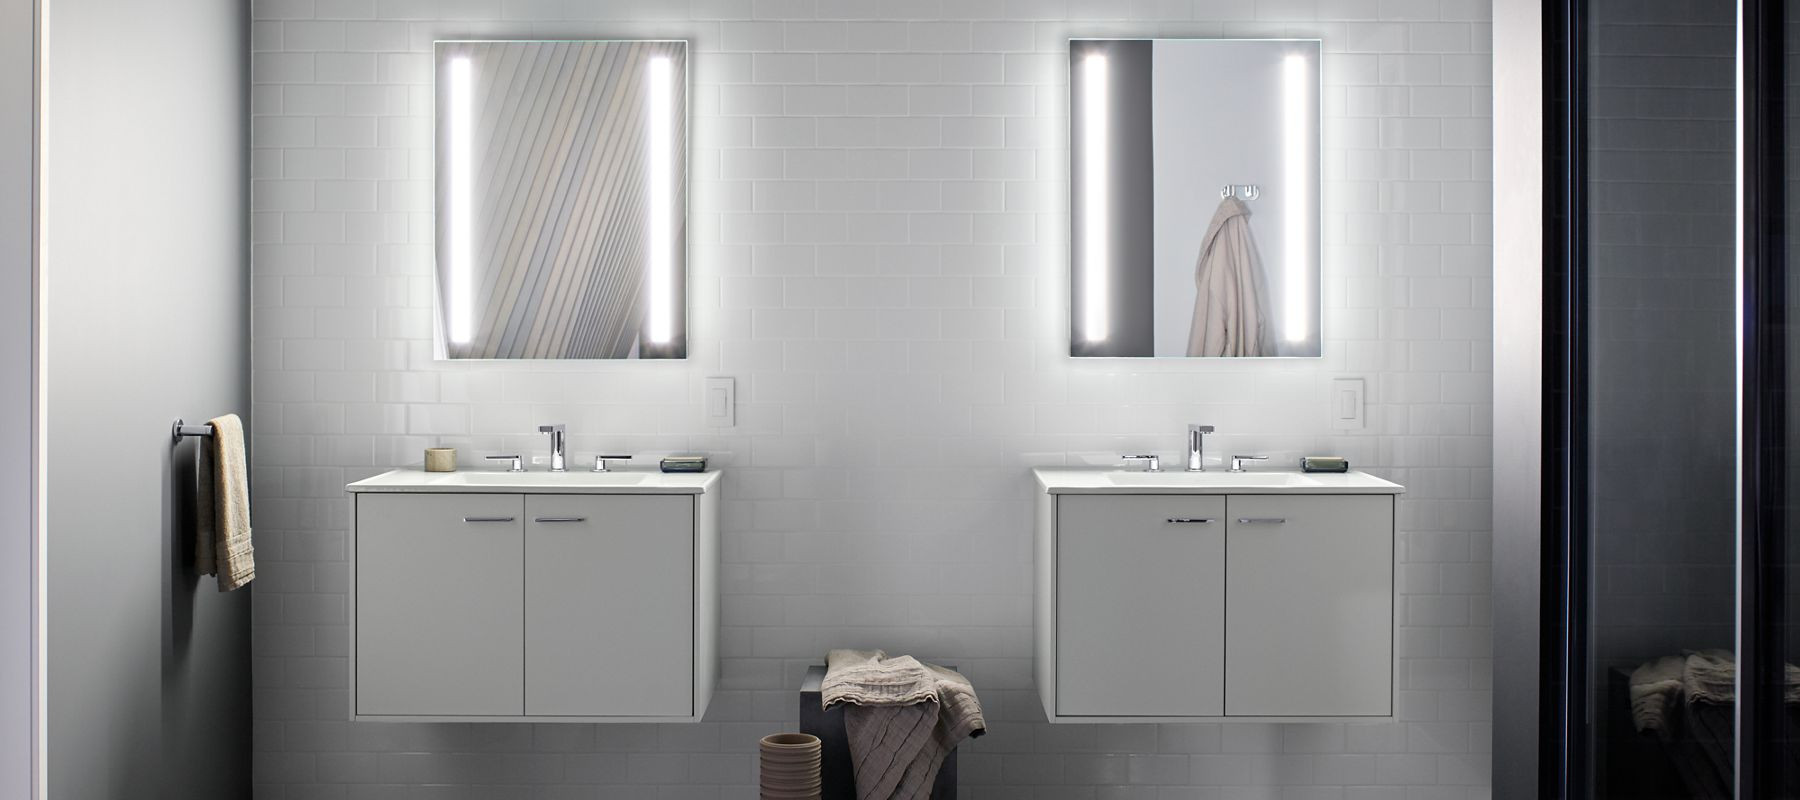 Kohler Bathroom Mirror Cabinet
 Bathroom Mirrors Bathroom